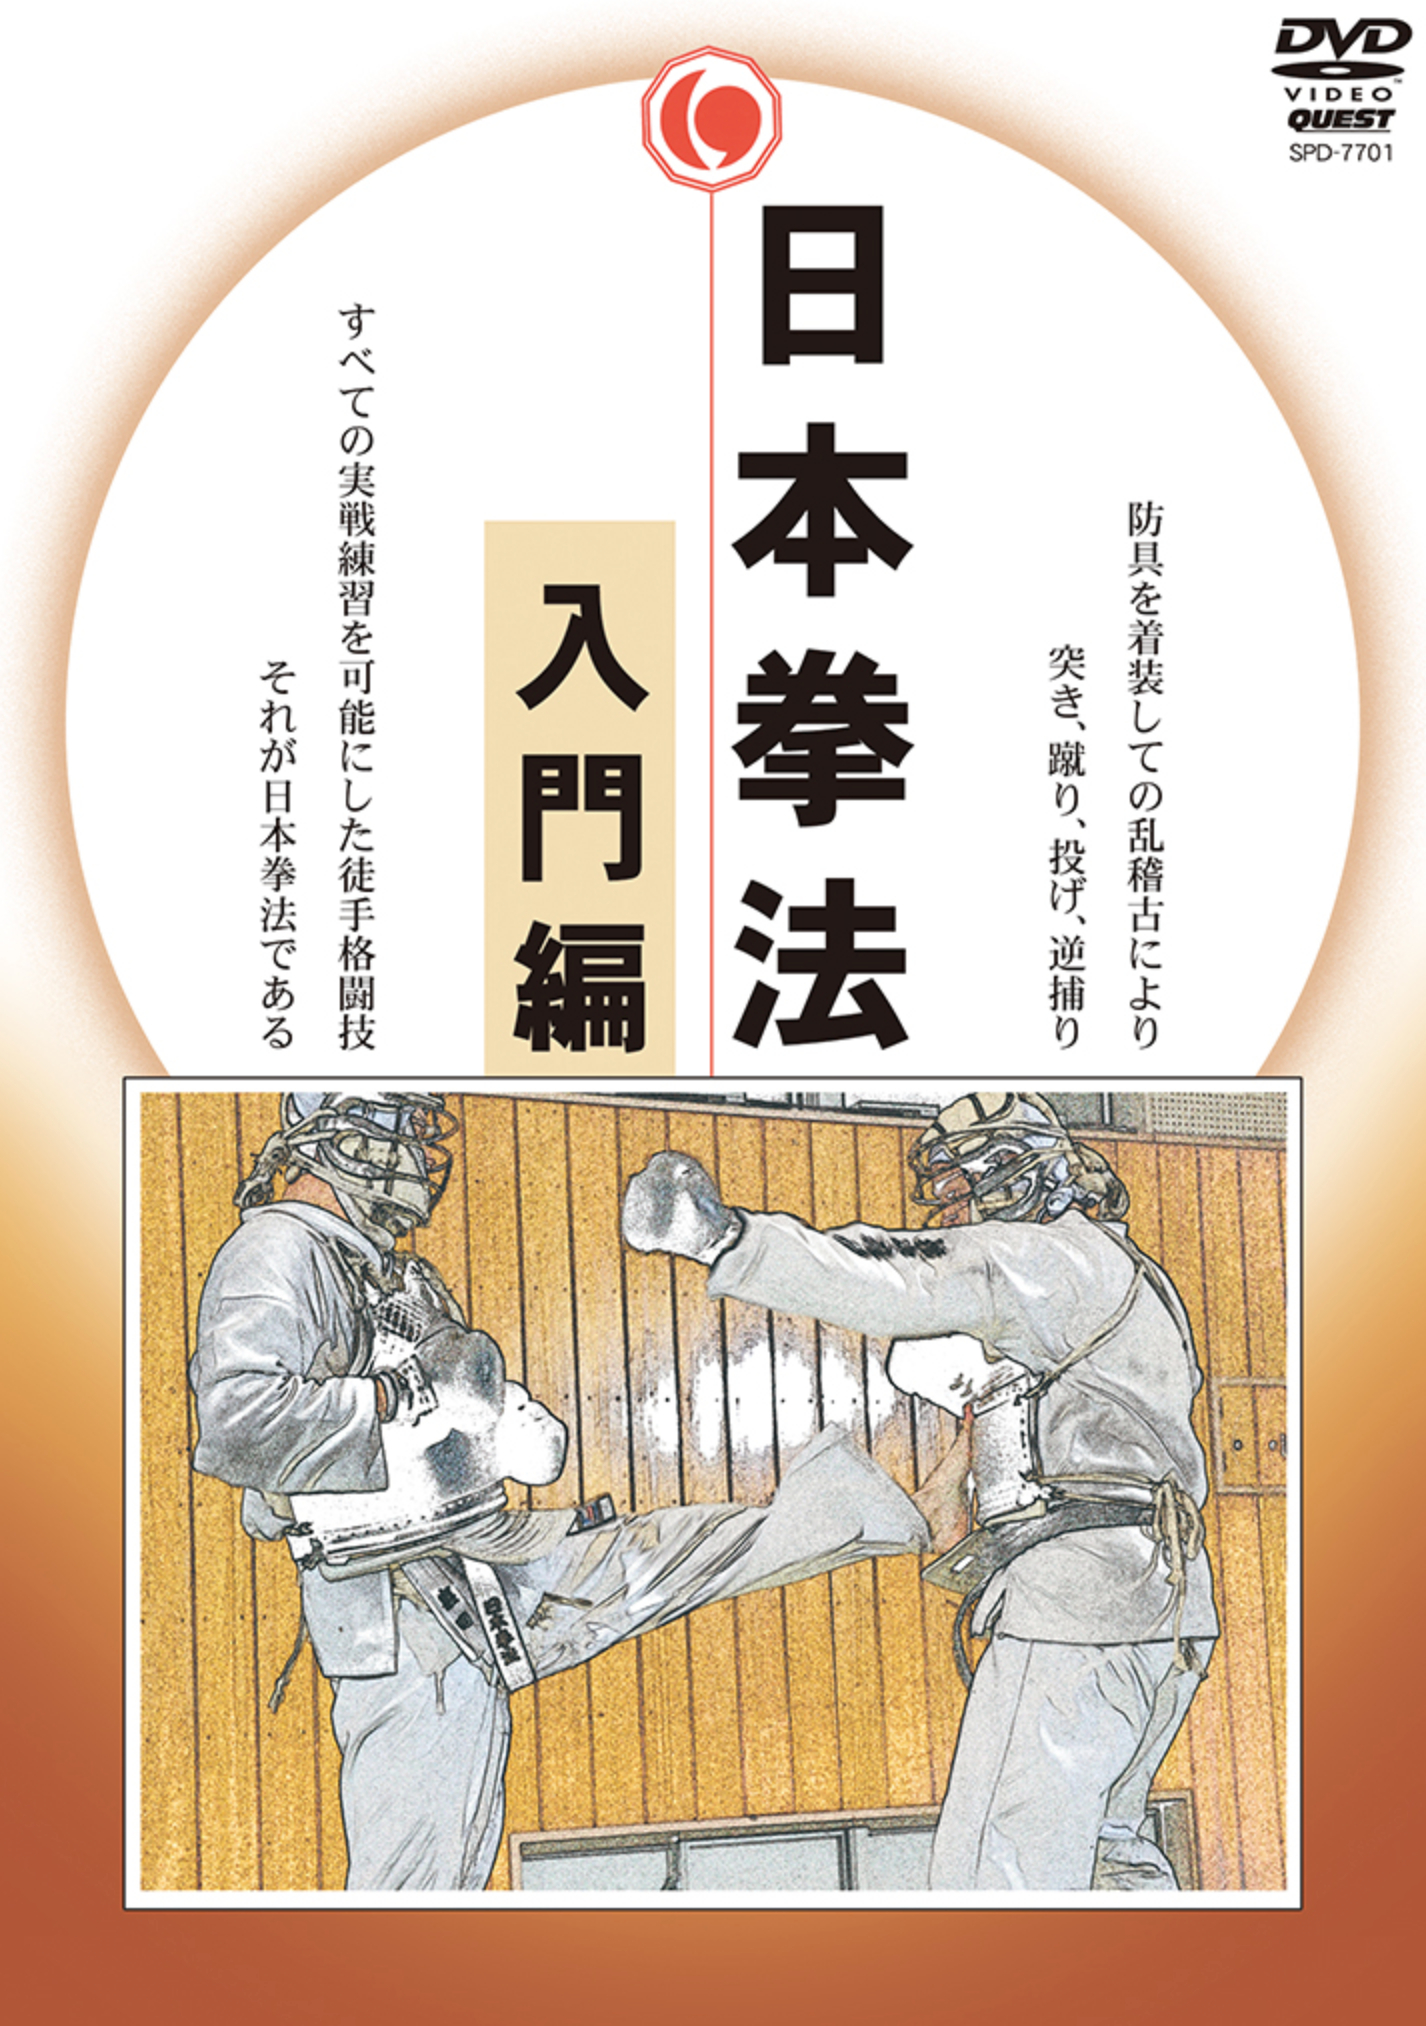 Intro to Japanese Kenpo DVD with Yutaka Dohi - Budovideos Inc